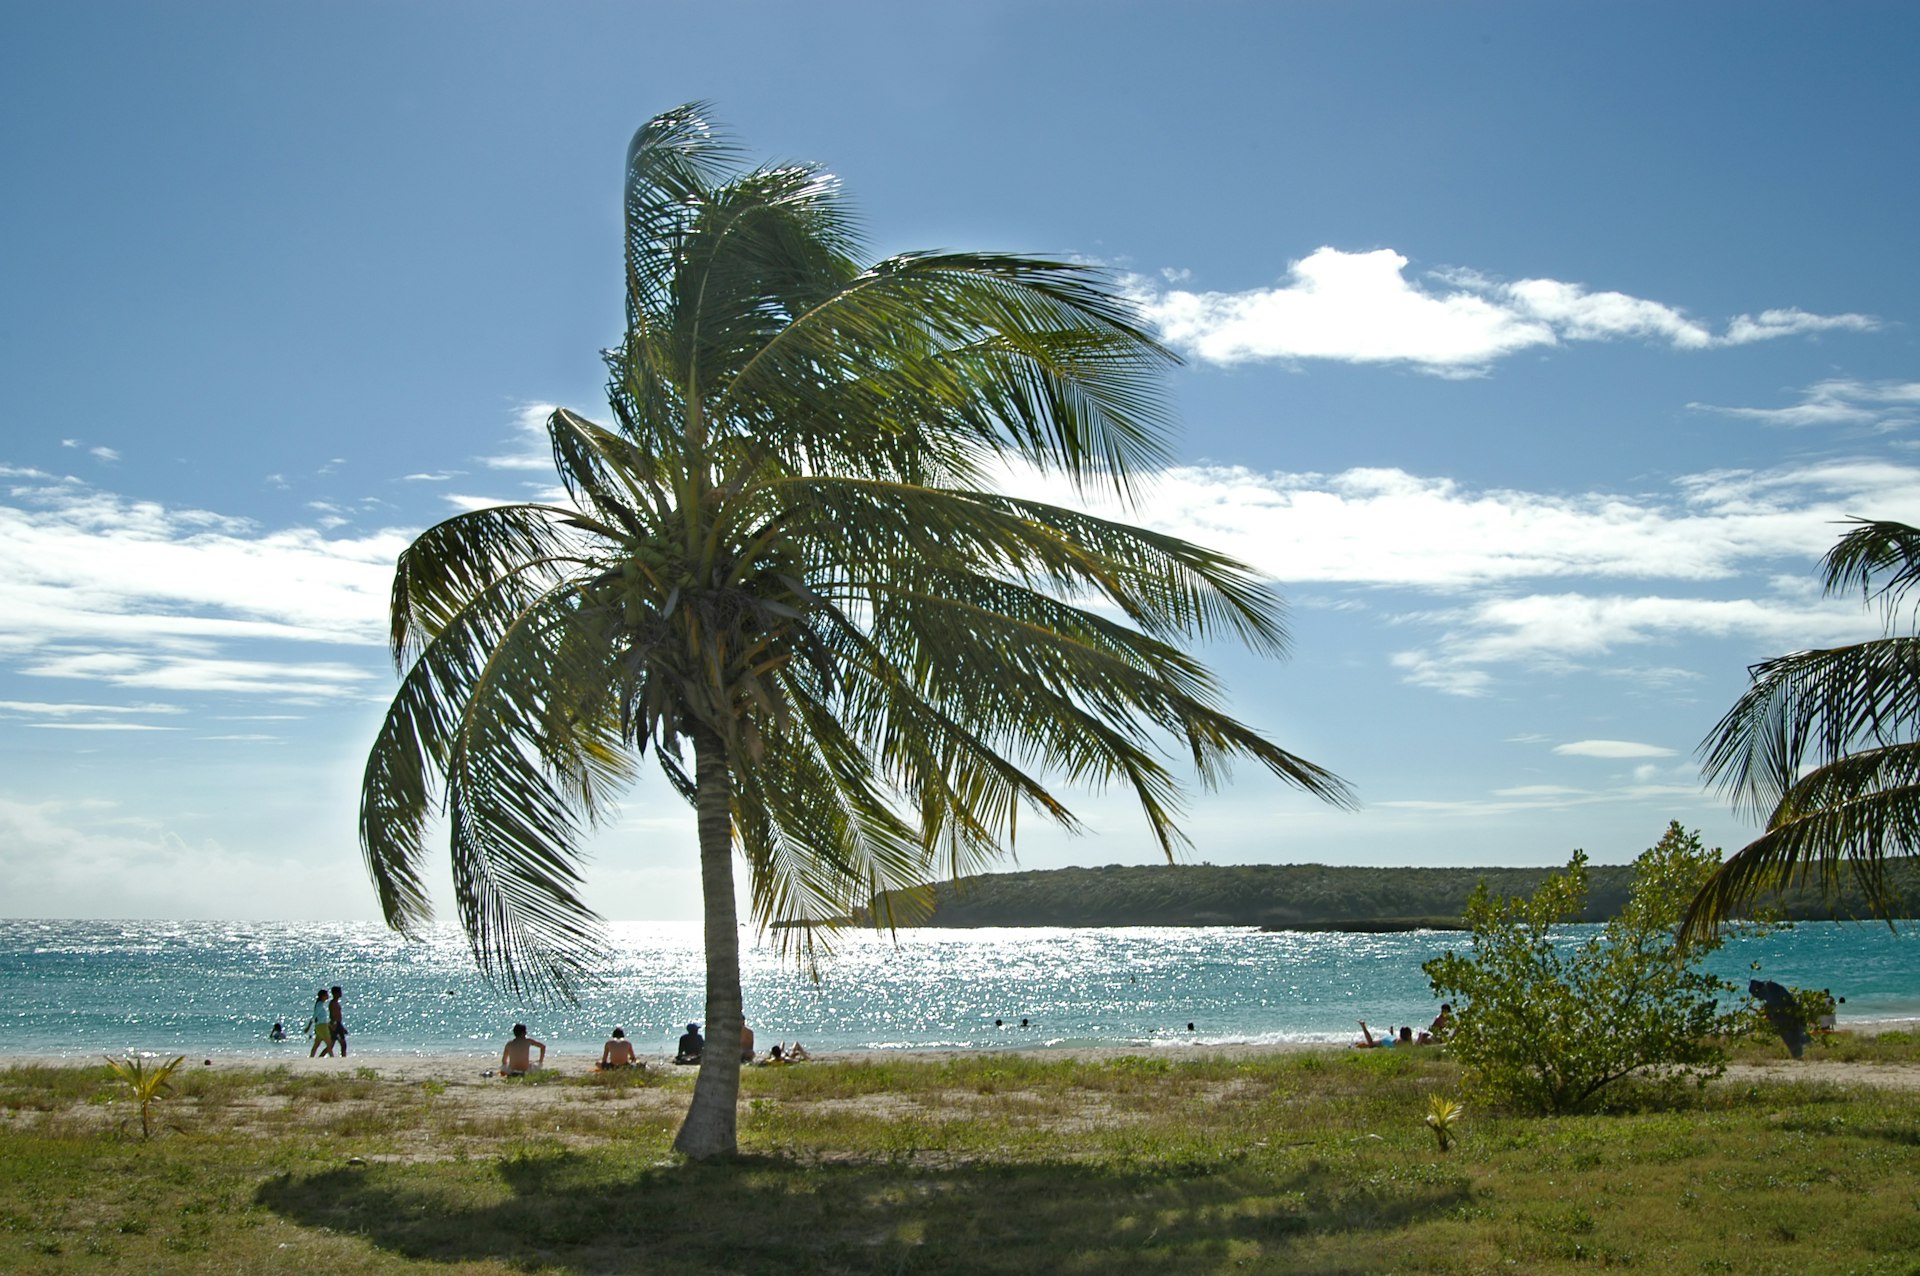 A palm tree along a beach on Vieques, Puerto Rico